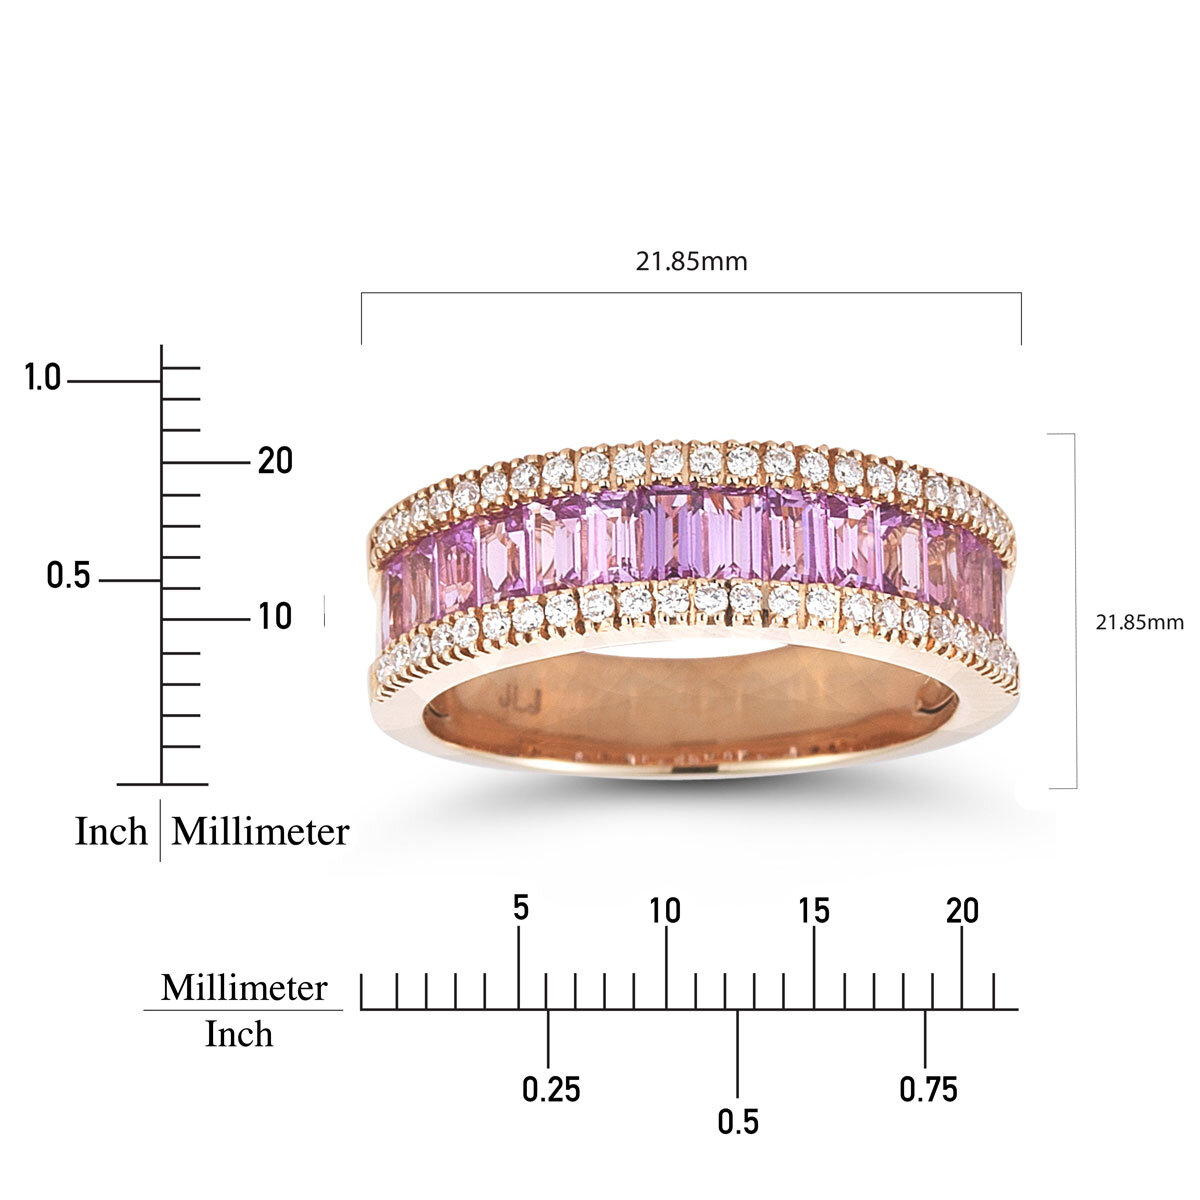 Baguette Cut Pink Sapphire & 0.23ctw Diamond Ring, 18ct Rose Gold